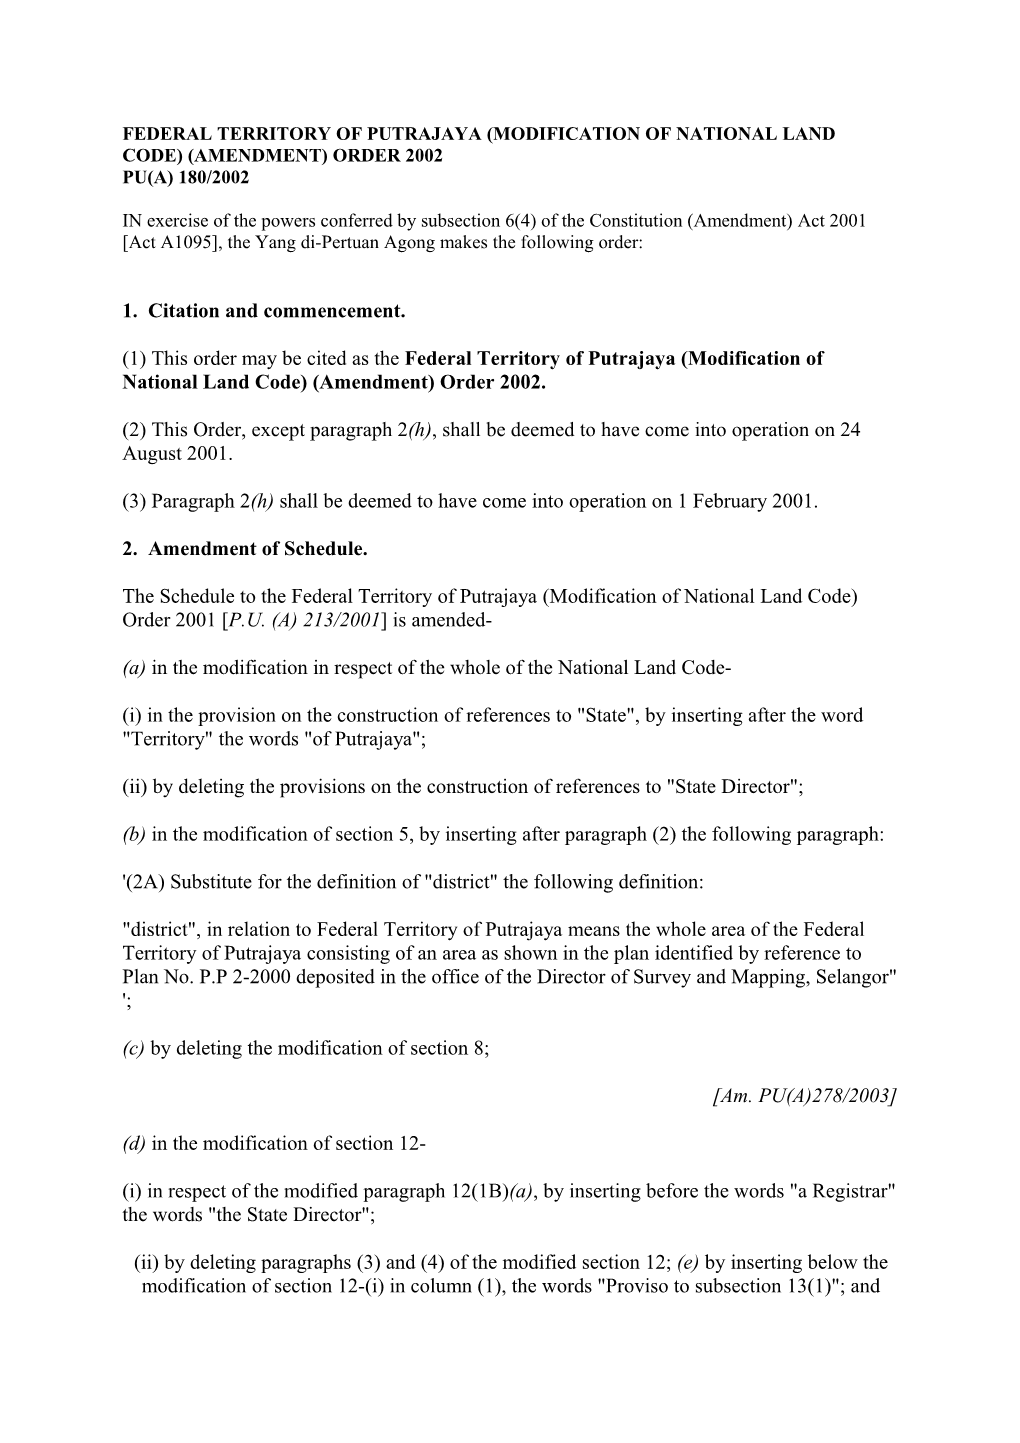 Federal Territory of Putrajaya (Modification of National Land Code) (Amendment) Order 2002